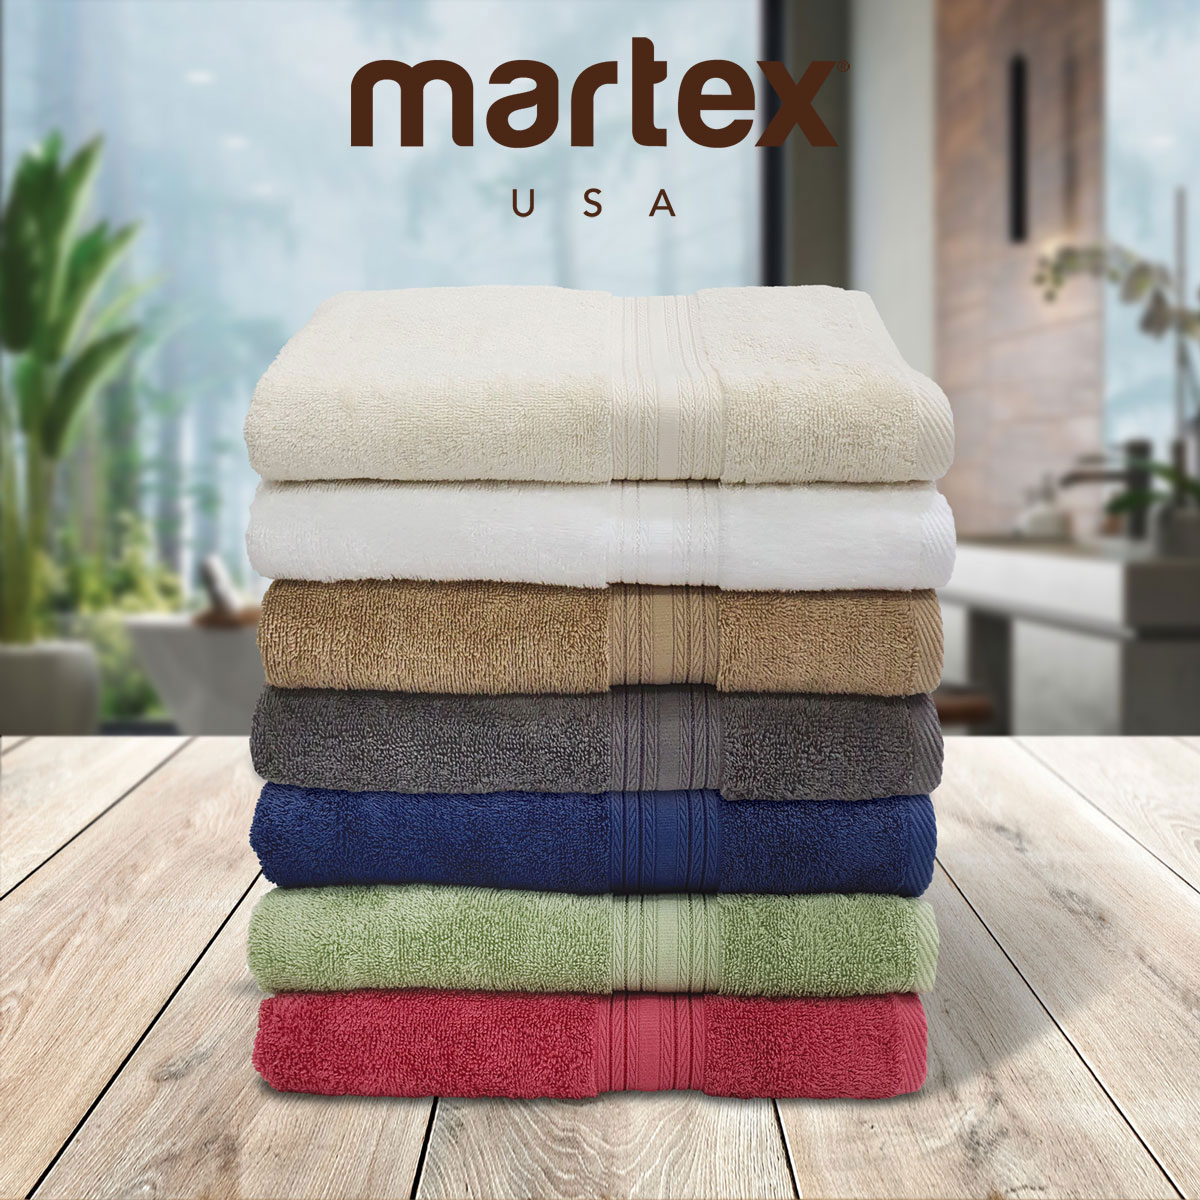 Martex Ultimate Bath Towel